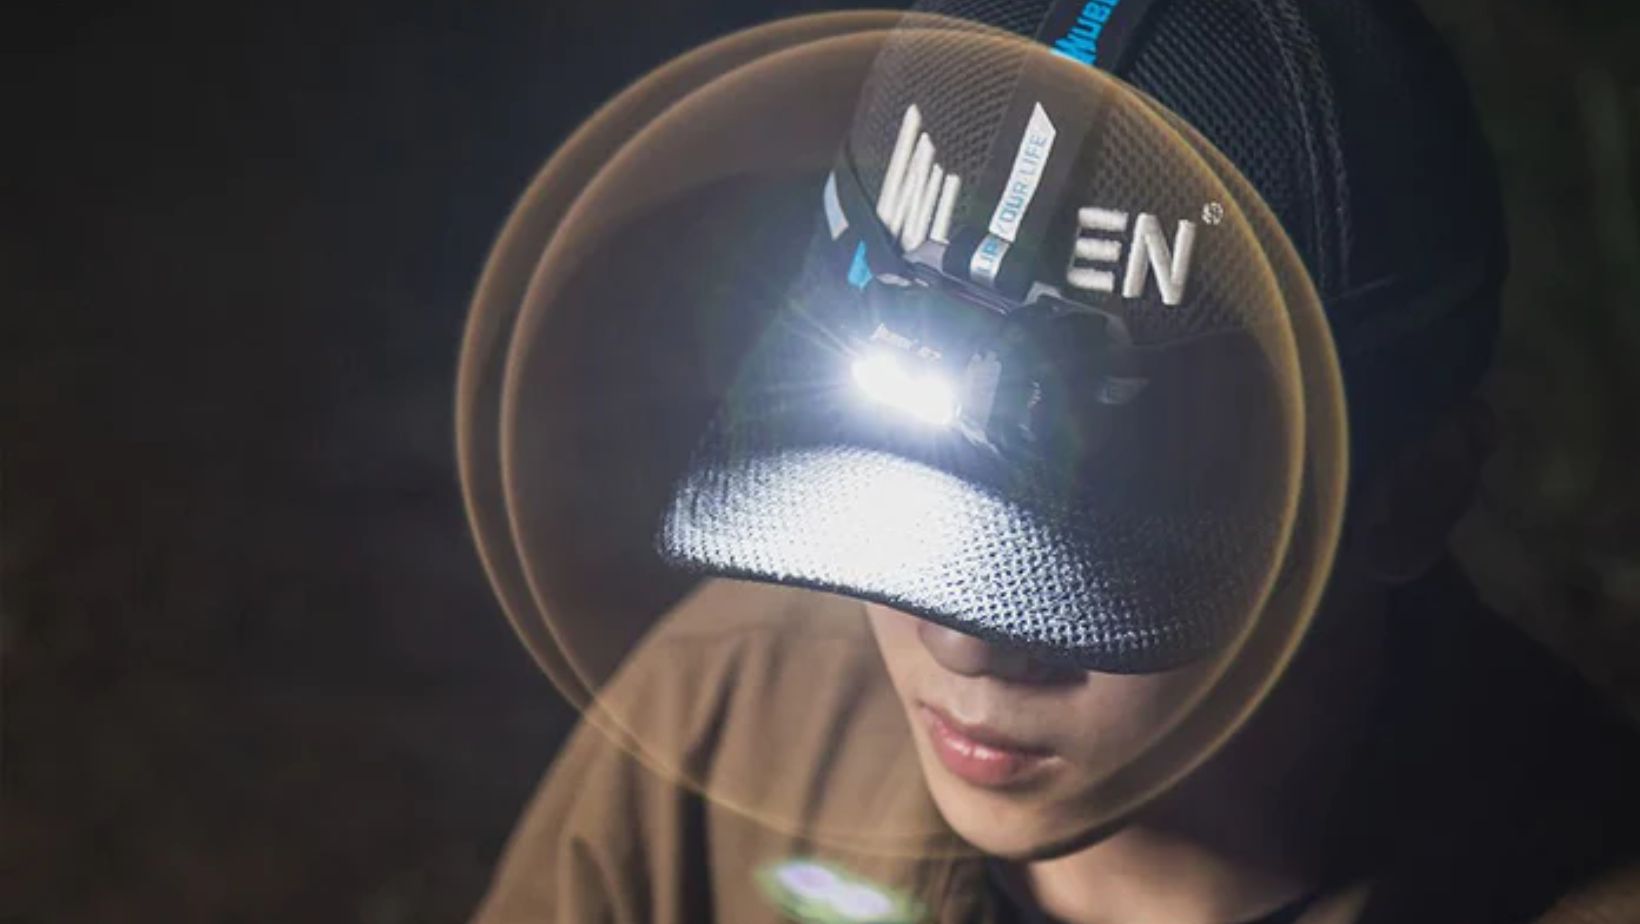 Why Choose Wuben E7 Headlamp For Your Next Adventure?